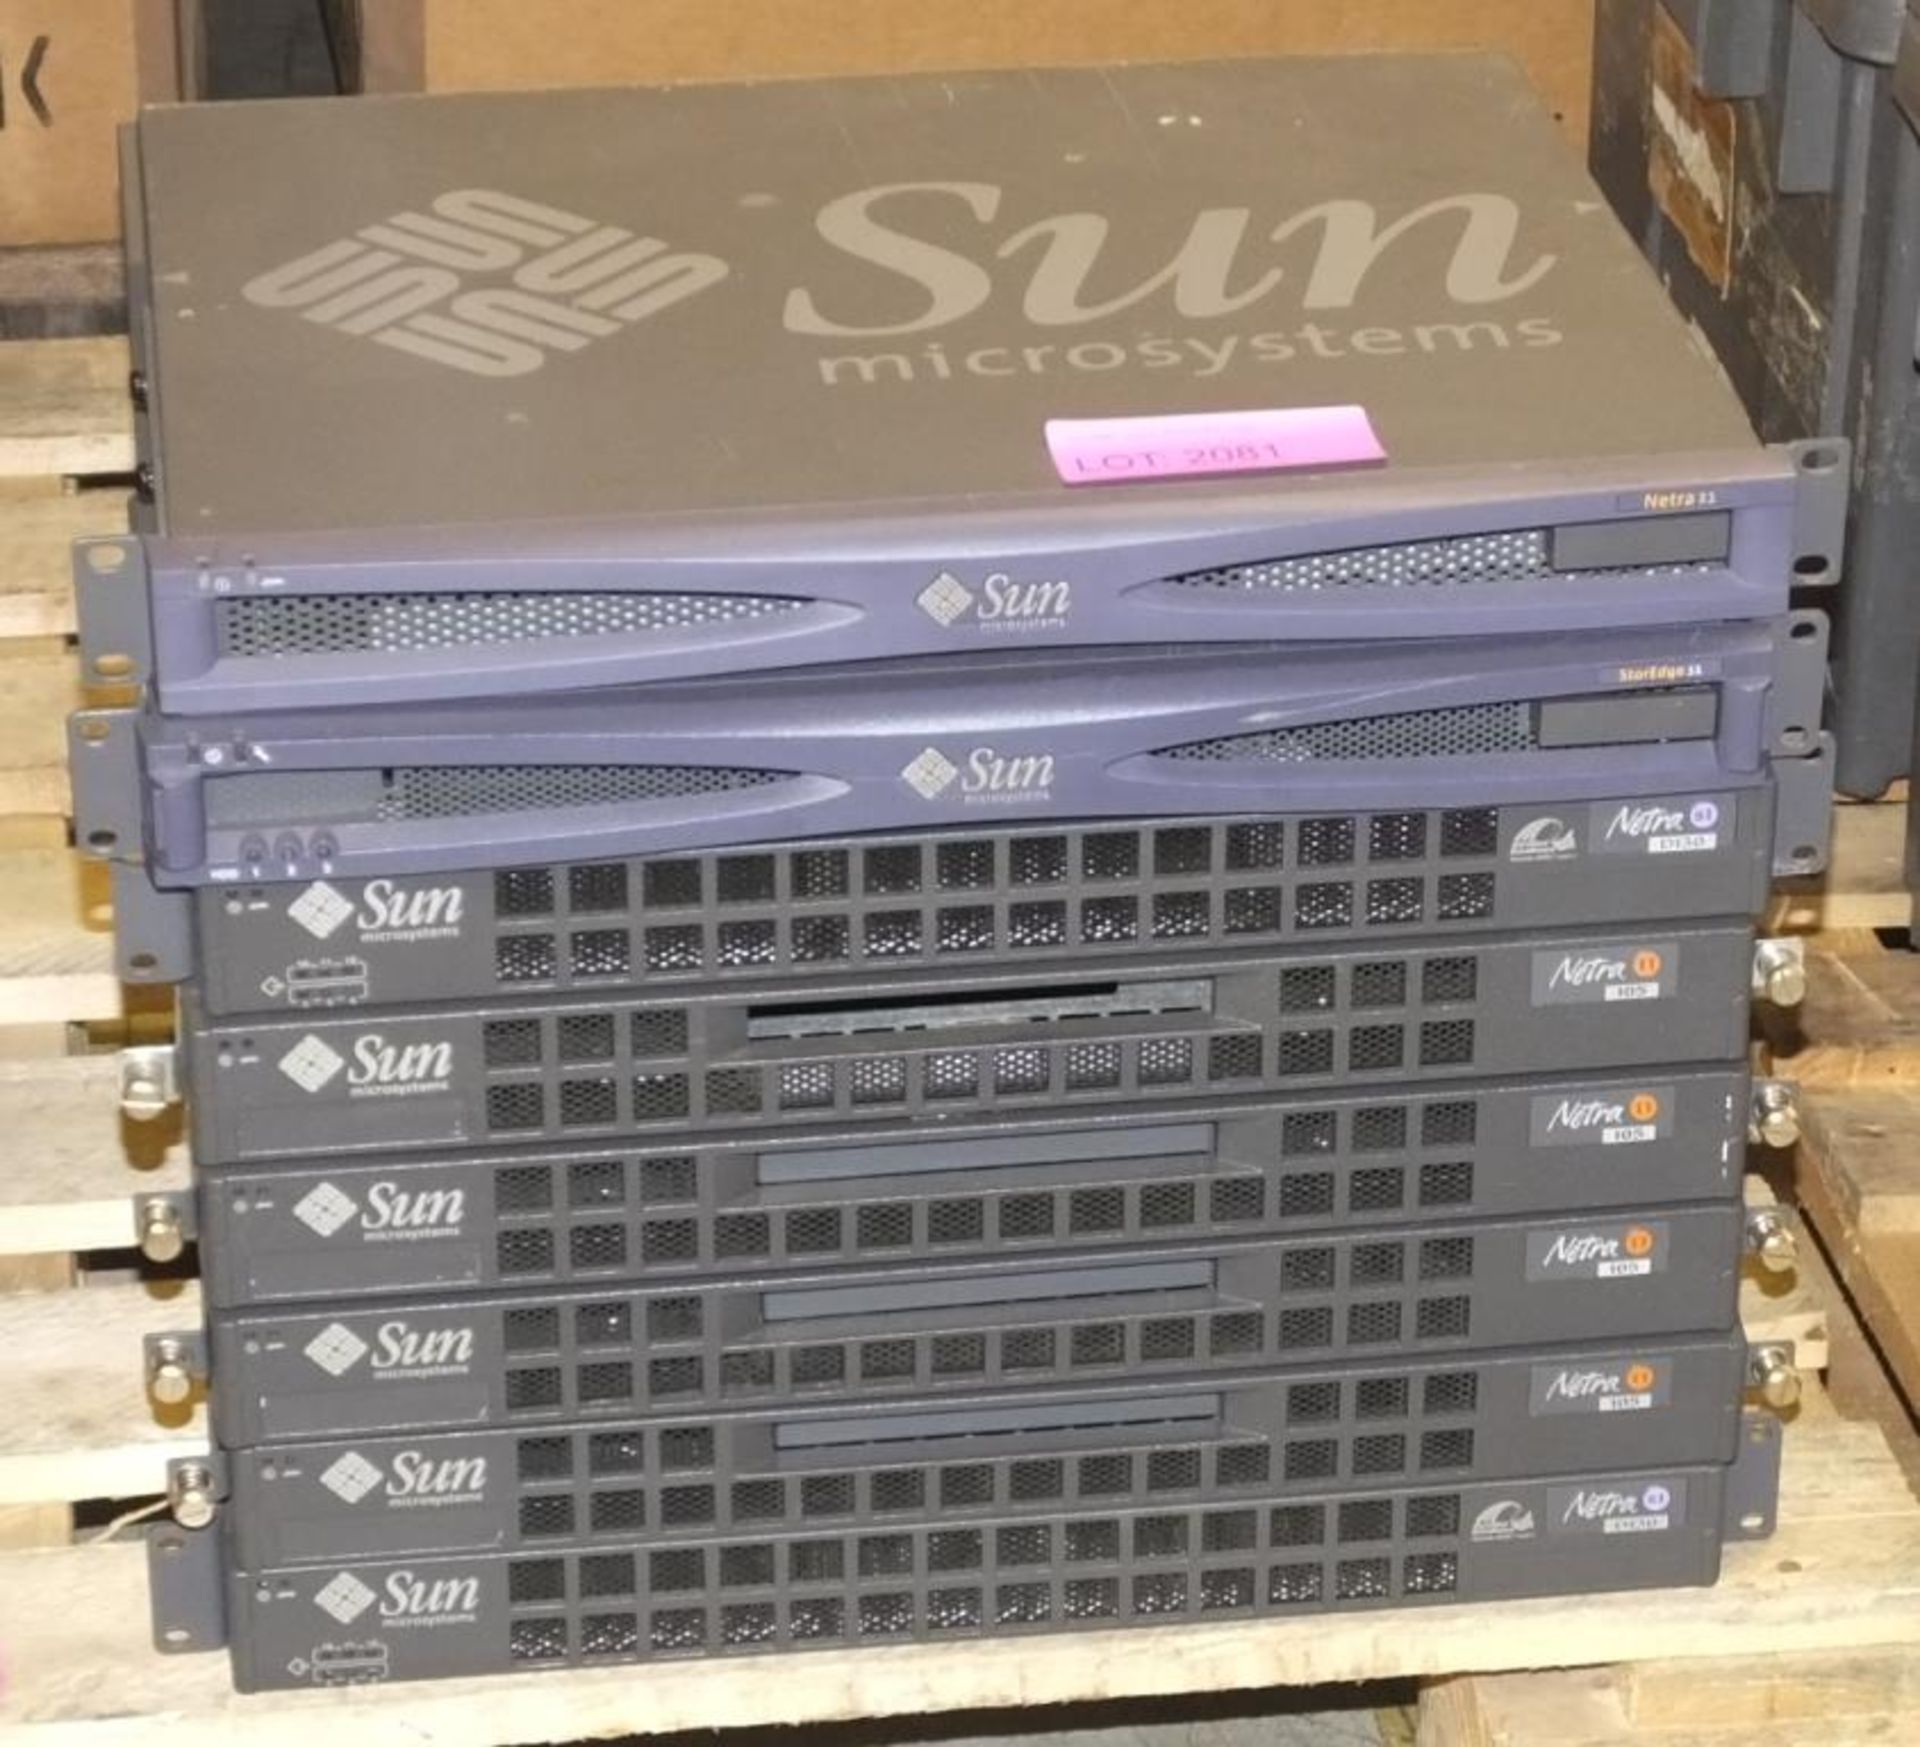 7x Sun Netra server blades, 1x storage server